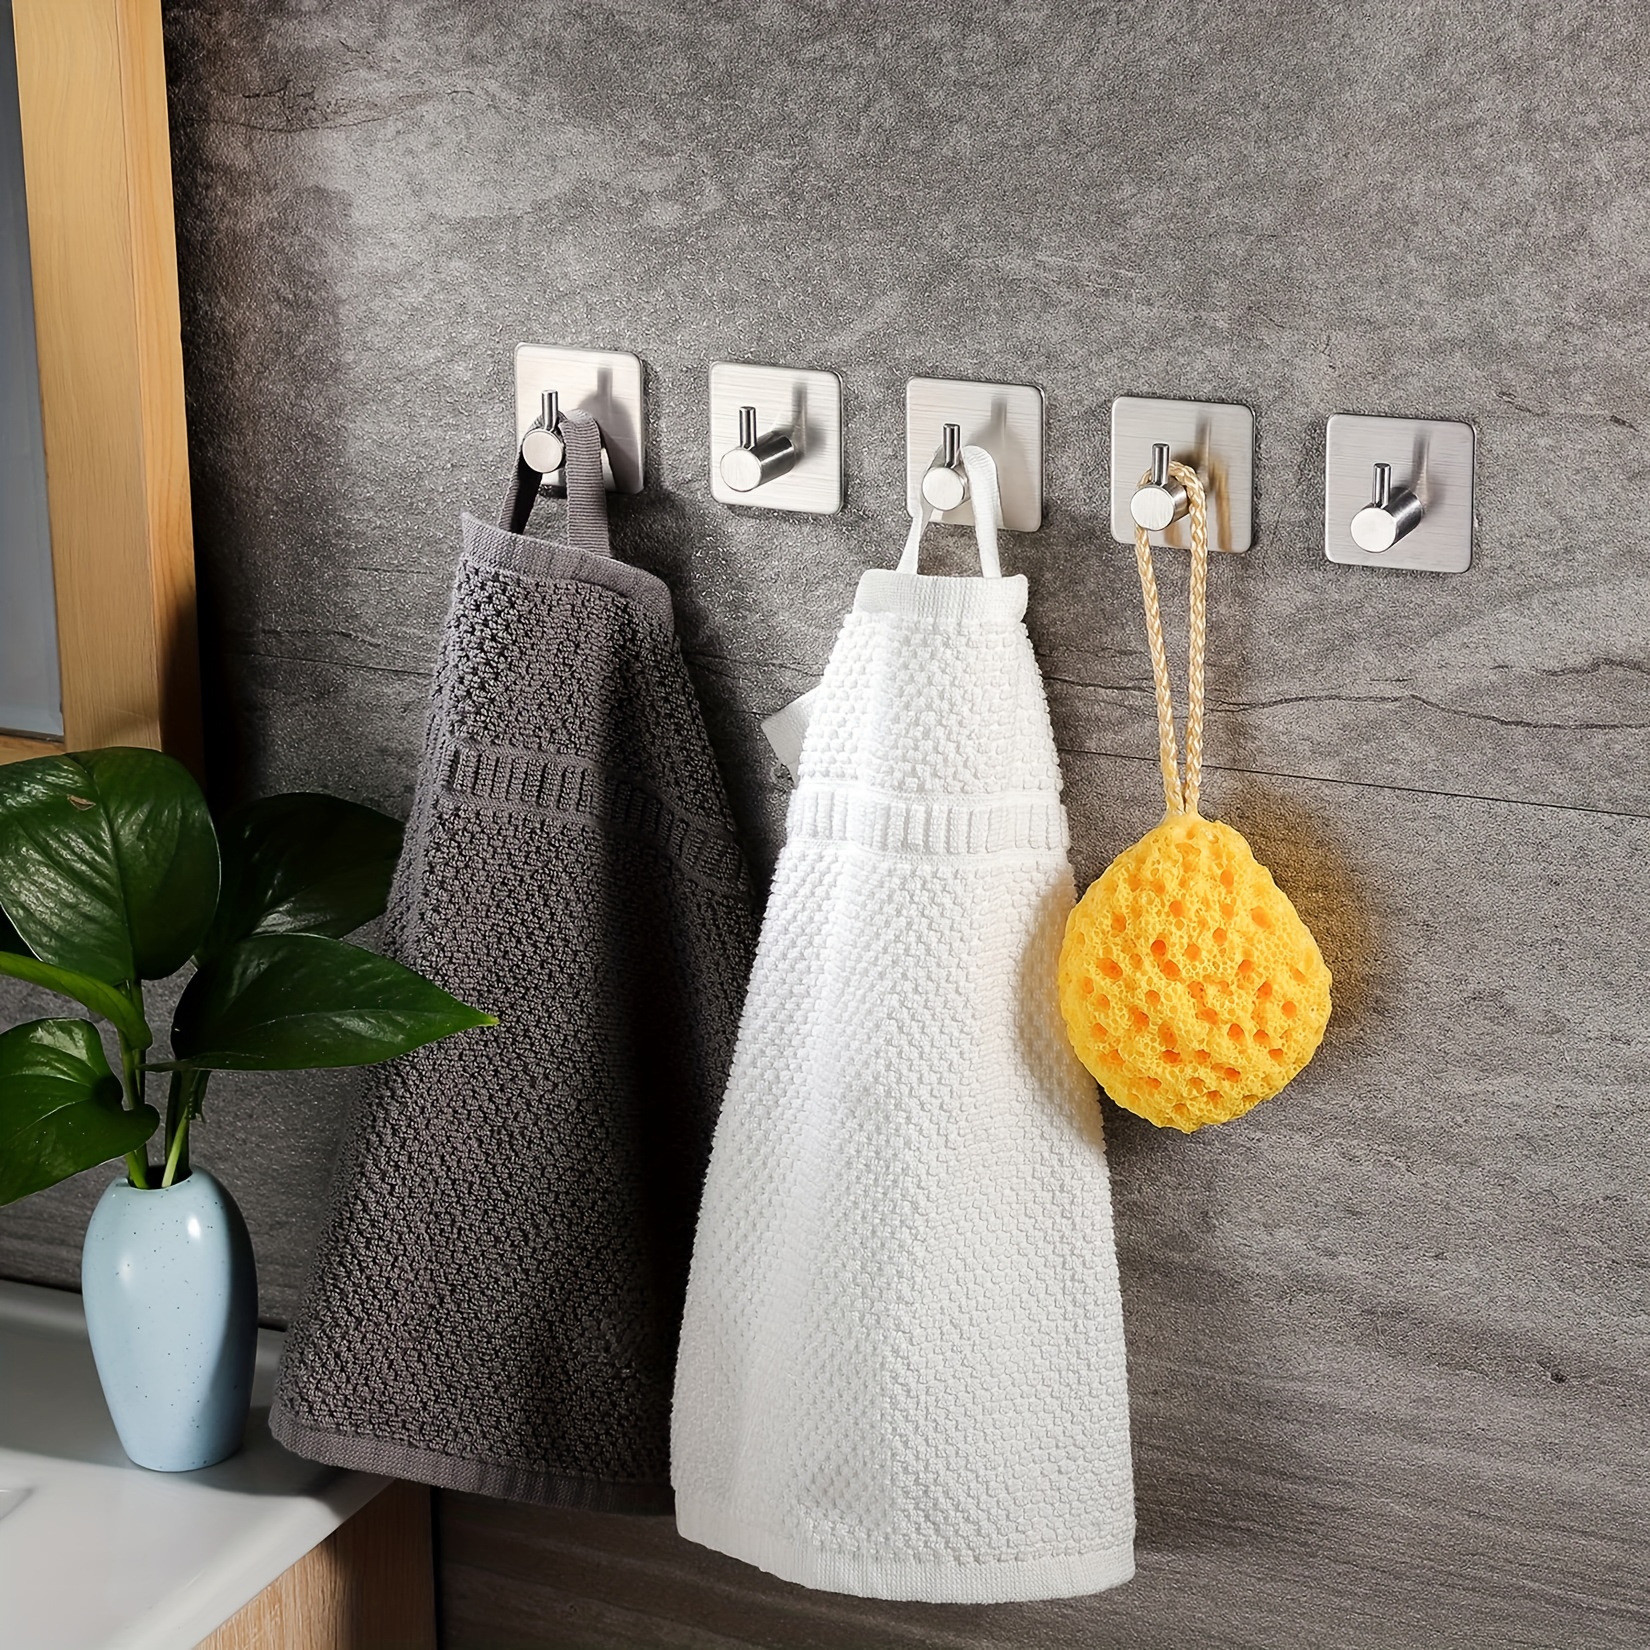 Self adhesive Towel Hooks Sus 304 Stainless Steel Stick Wall